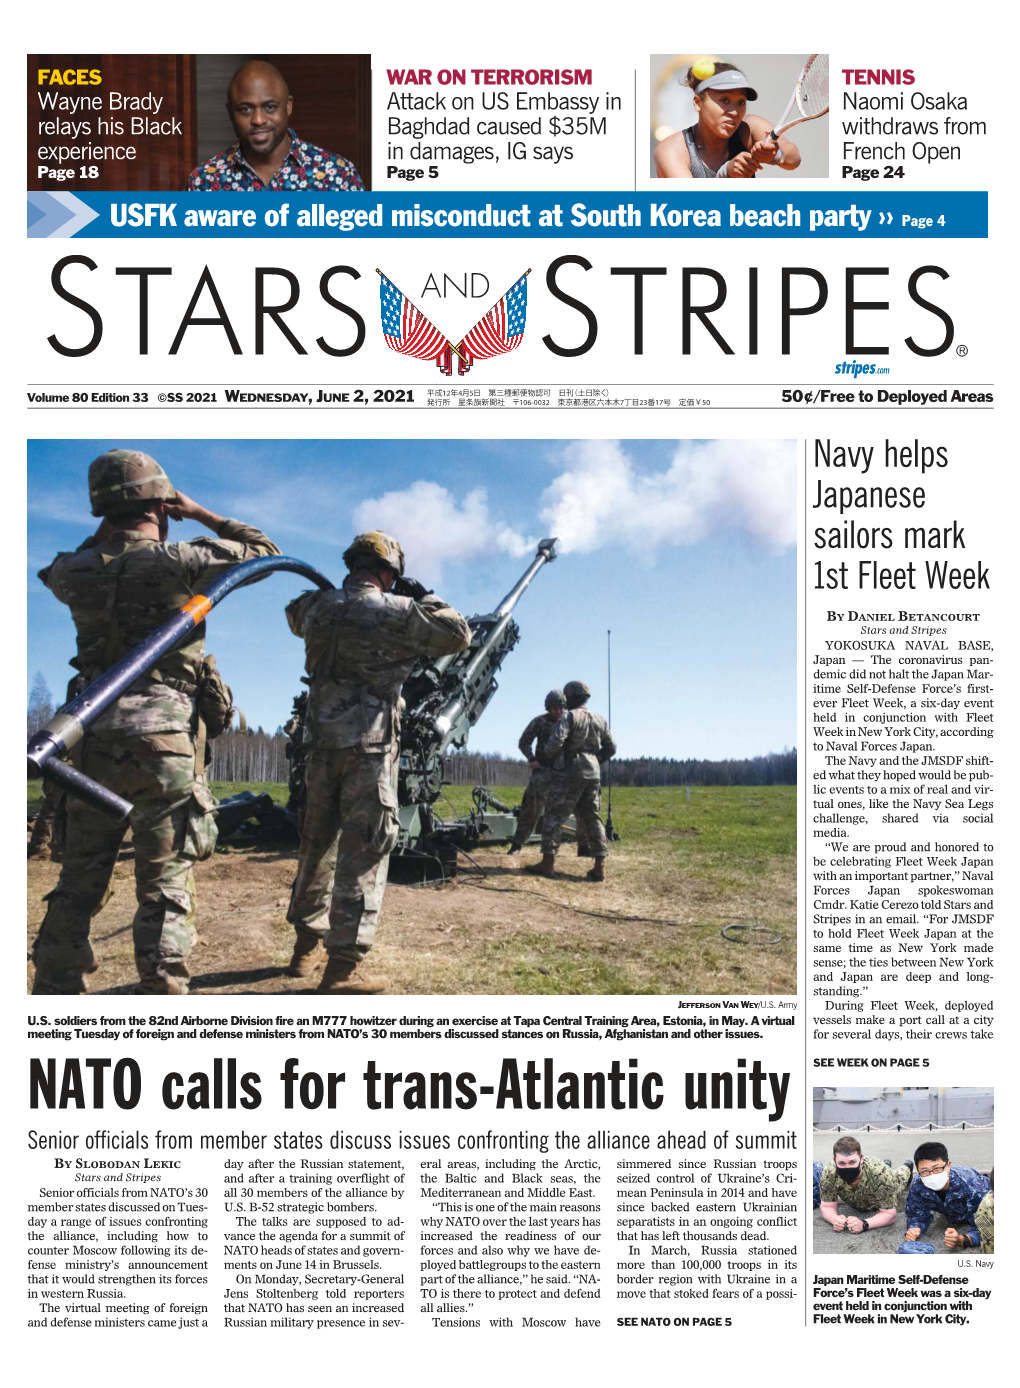 NATO Calls for Trans-Atlantic Unity